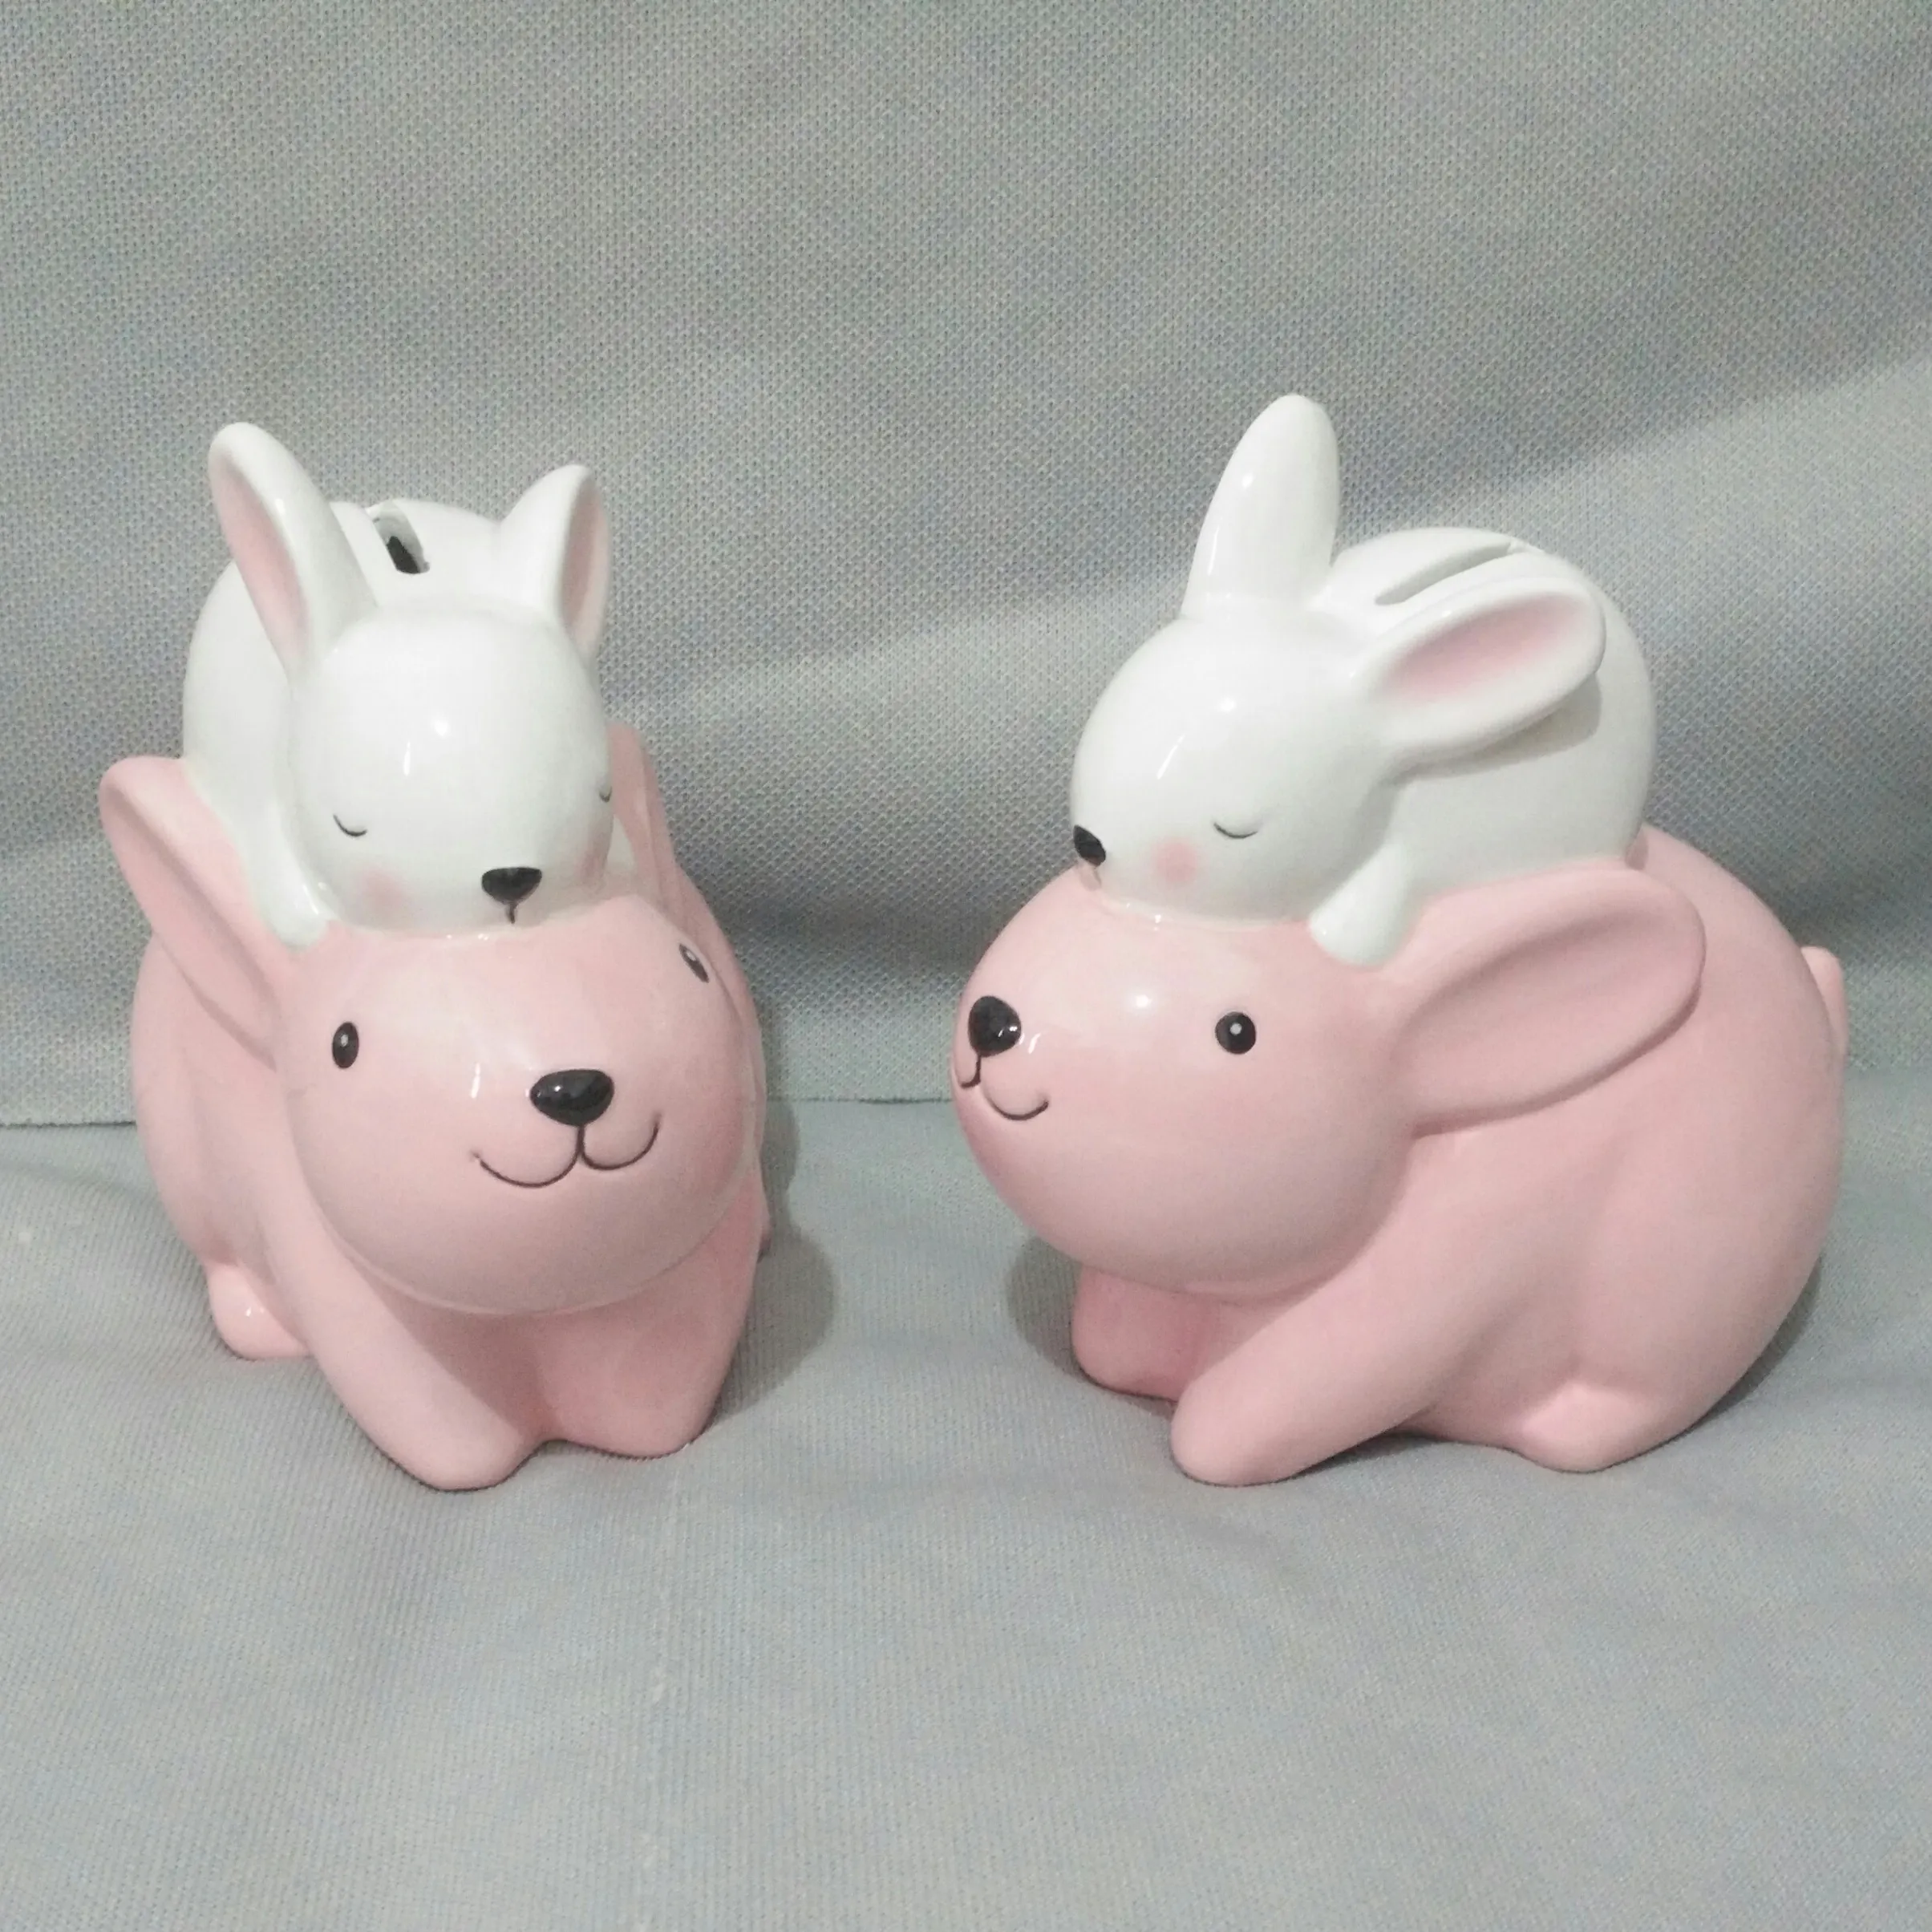 Hot selling lovely ceramic pink white rabbit money box piggy bank house